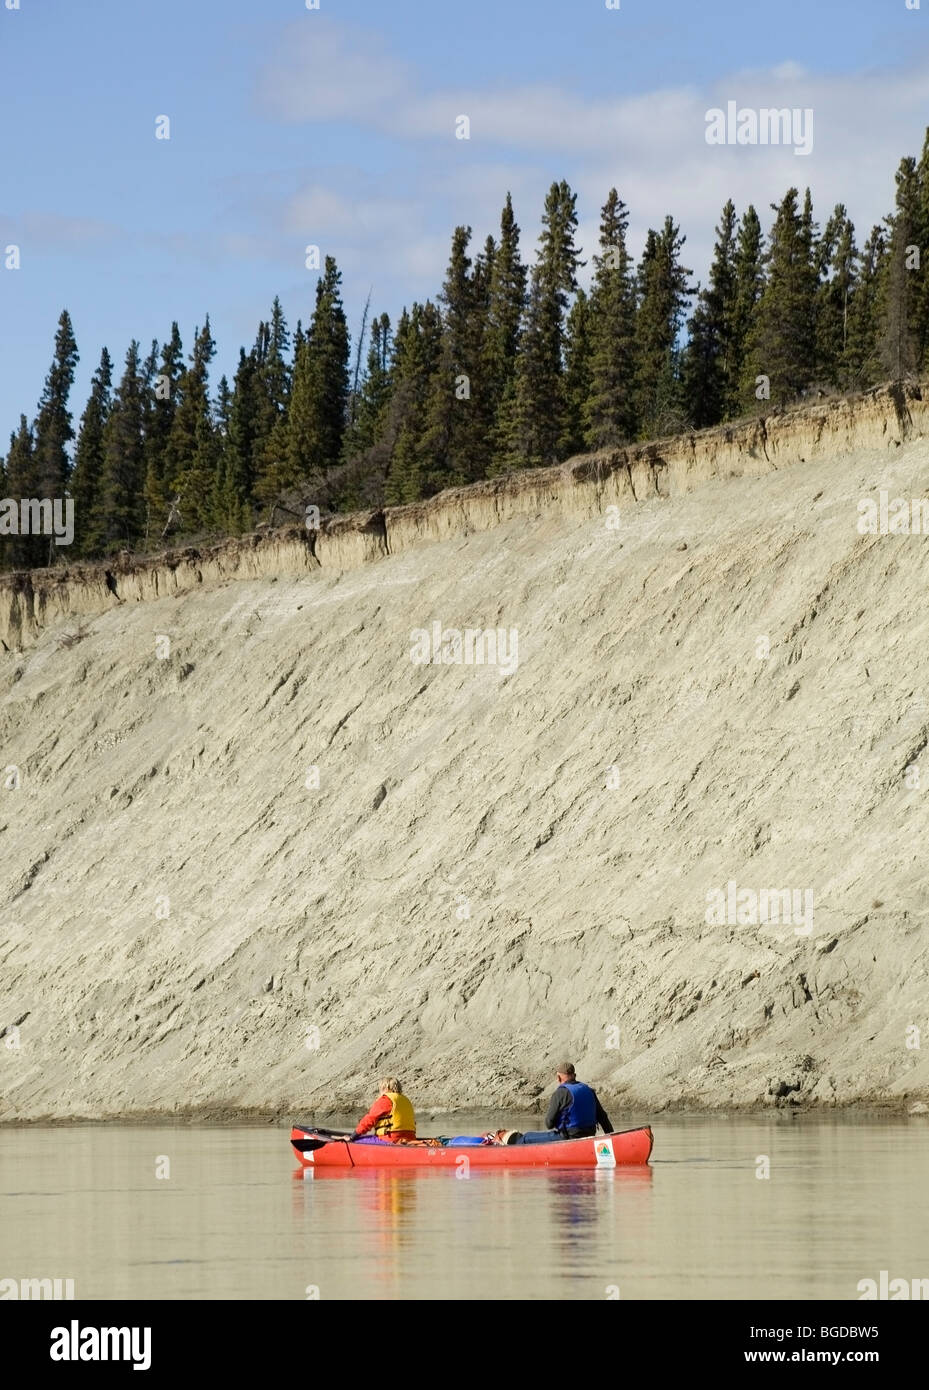 Paar, Mann und Frau in ein Kanu, Kanusport, hoch geschnittene Bank, Erosion hinter Takhini River, Yukon Territorium, Kanada Stockfoto